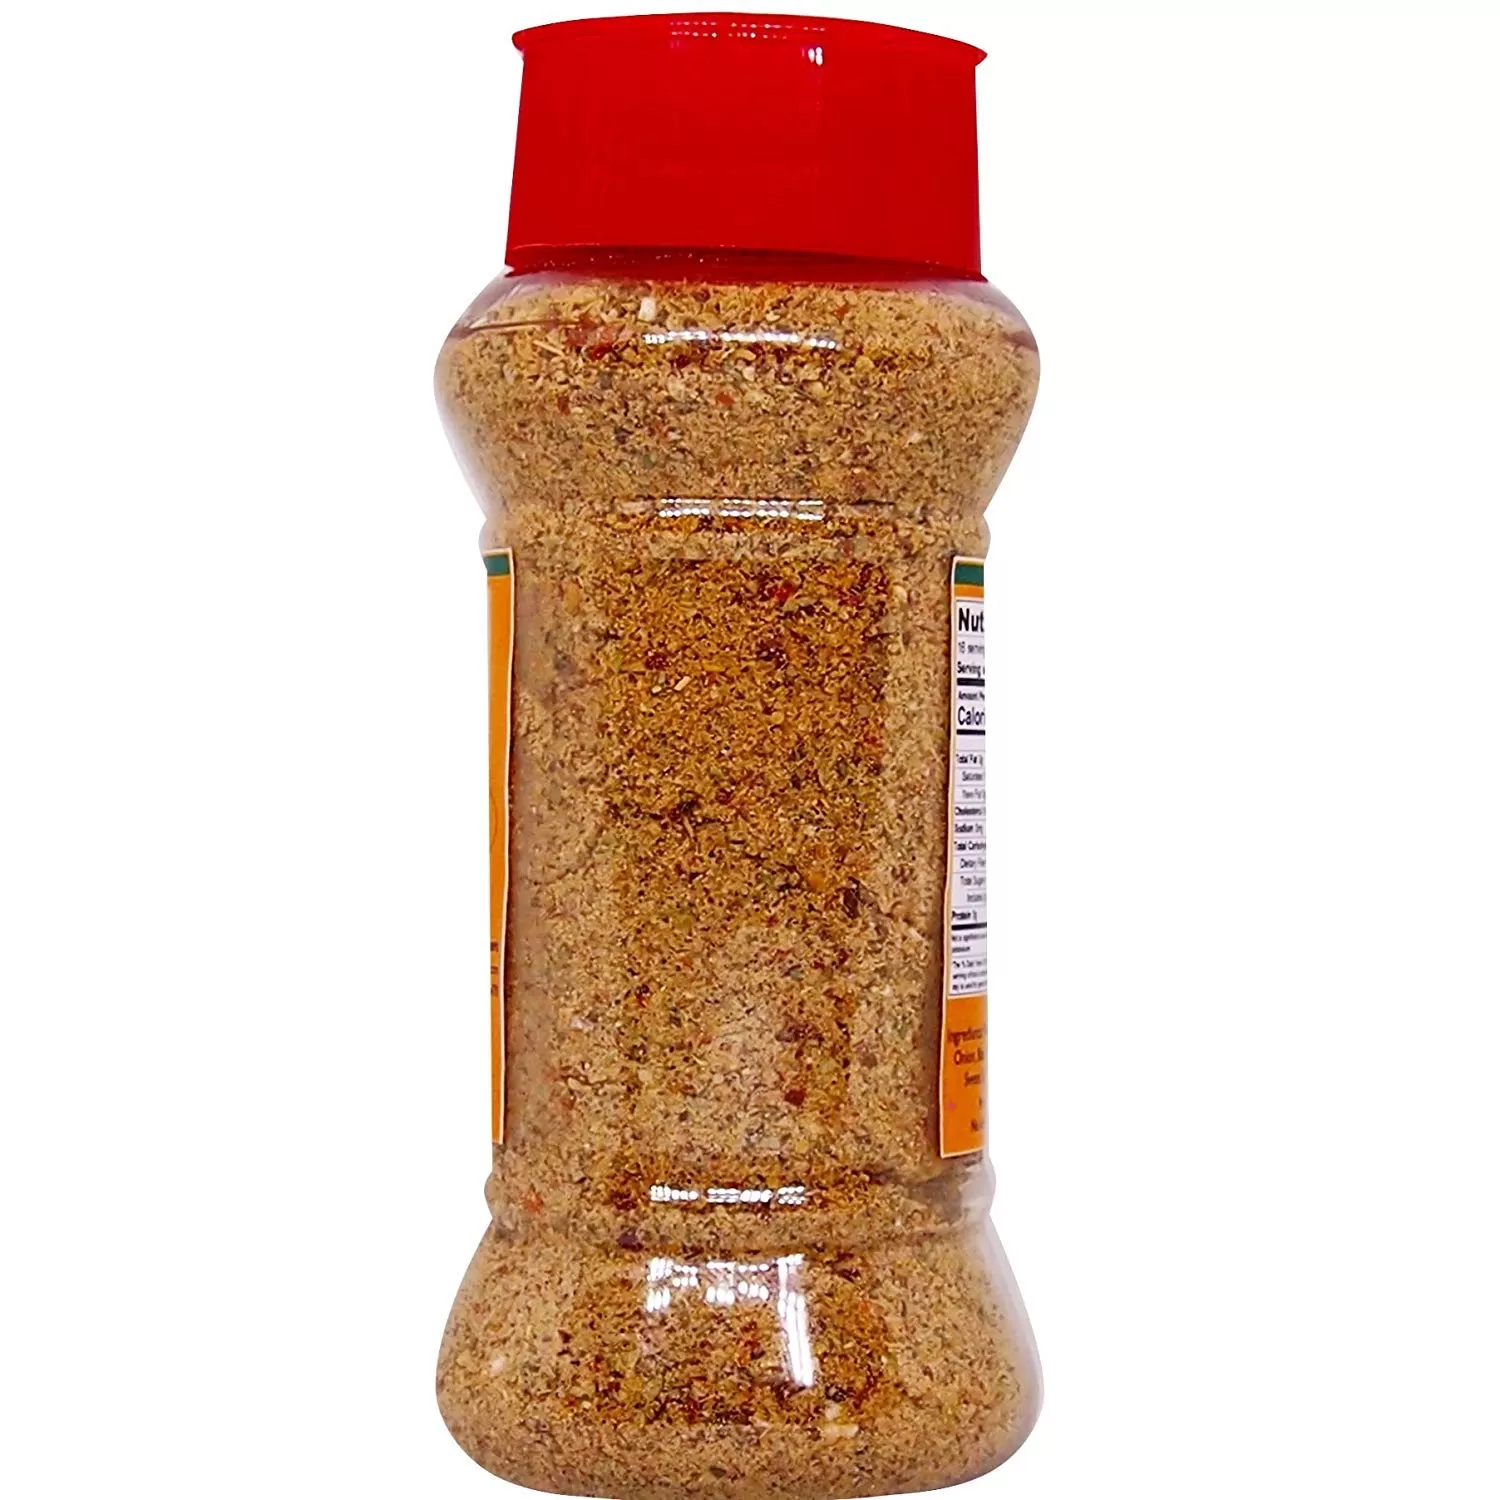 BRAAI Indo African Seasoning 80g (2.82 oz)g | Dispenser Bottle by Tassyam, 5 image